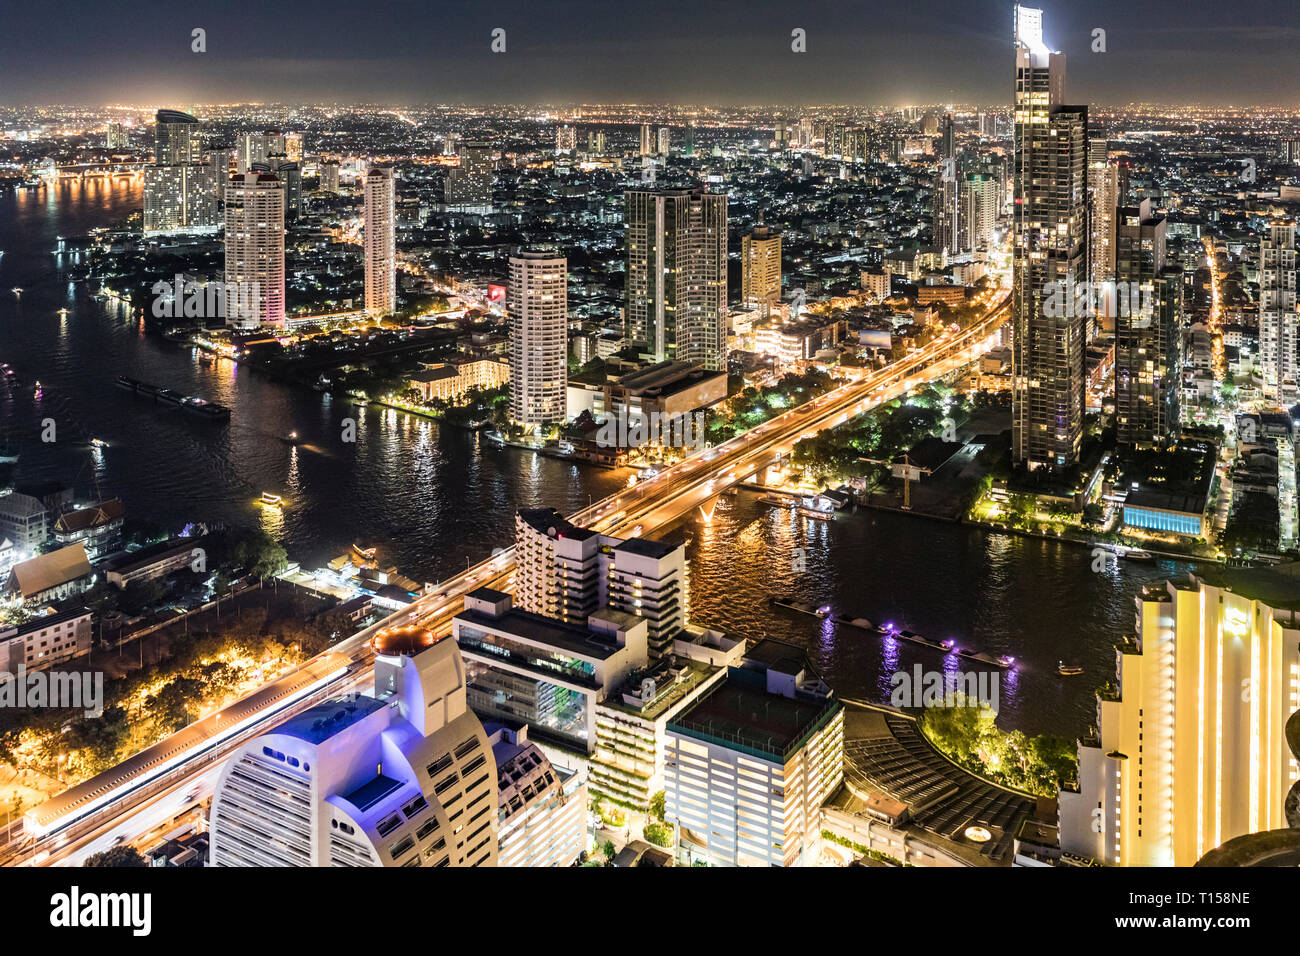 Thailand, Bangkok, aerial view of the city with Chao Phraya river at night Stock Photo